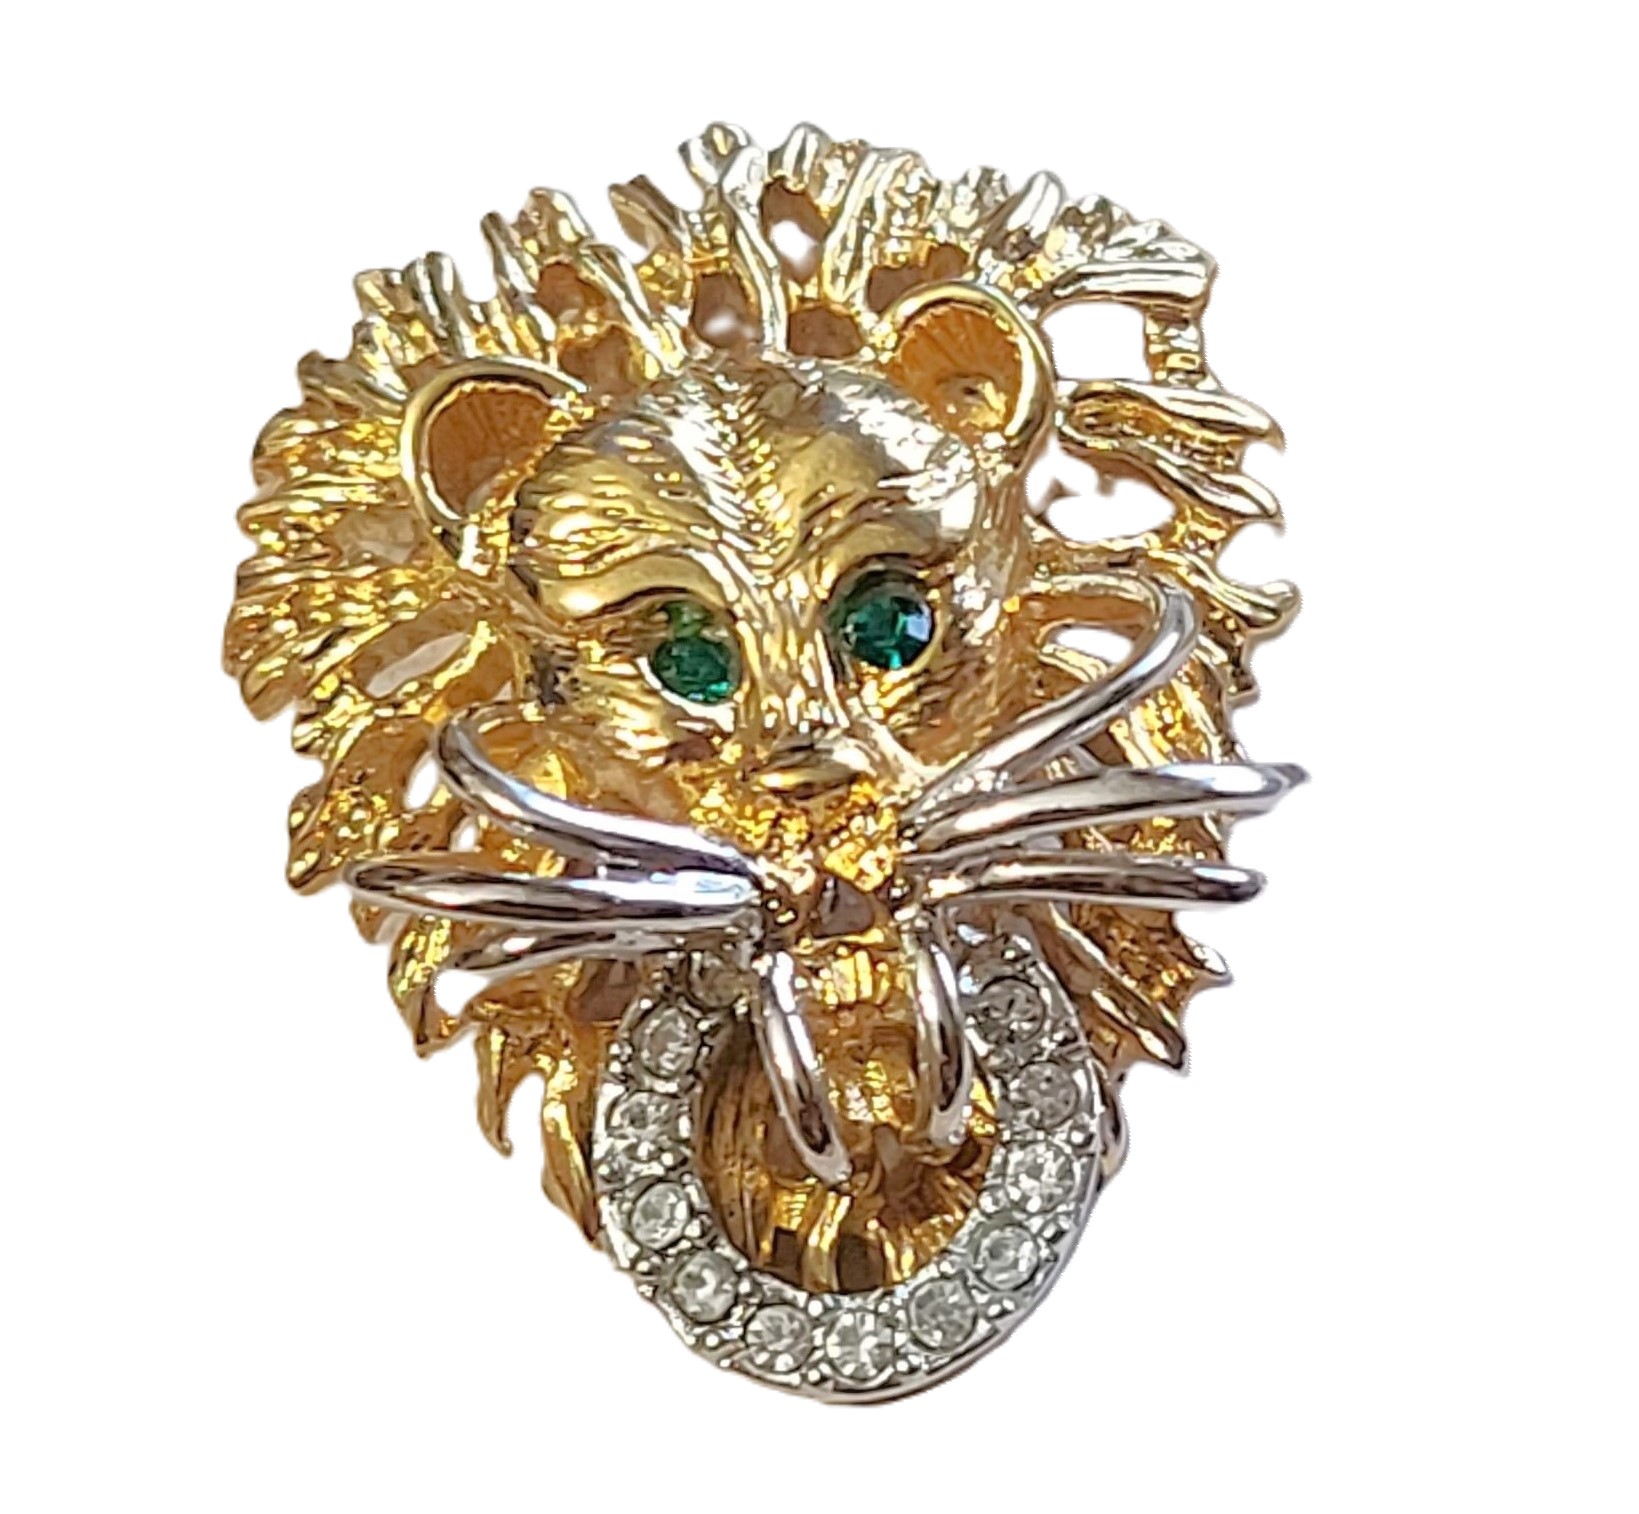 Lion pendant slide, for scarf or chain, green rhinestone eyes